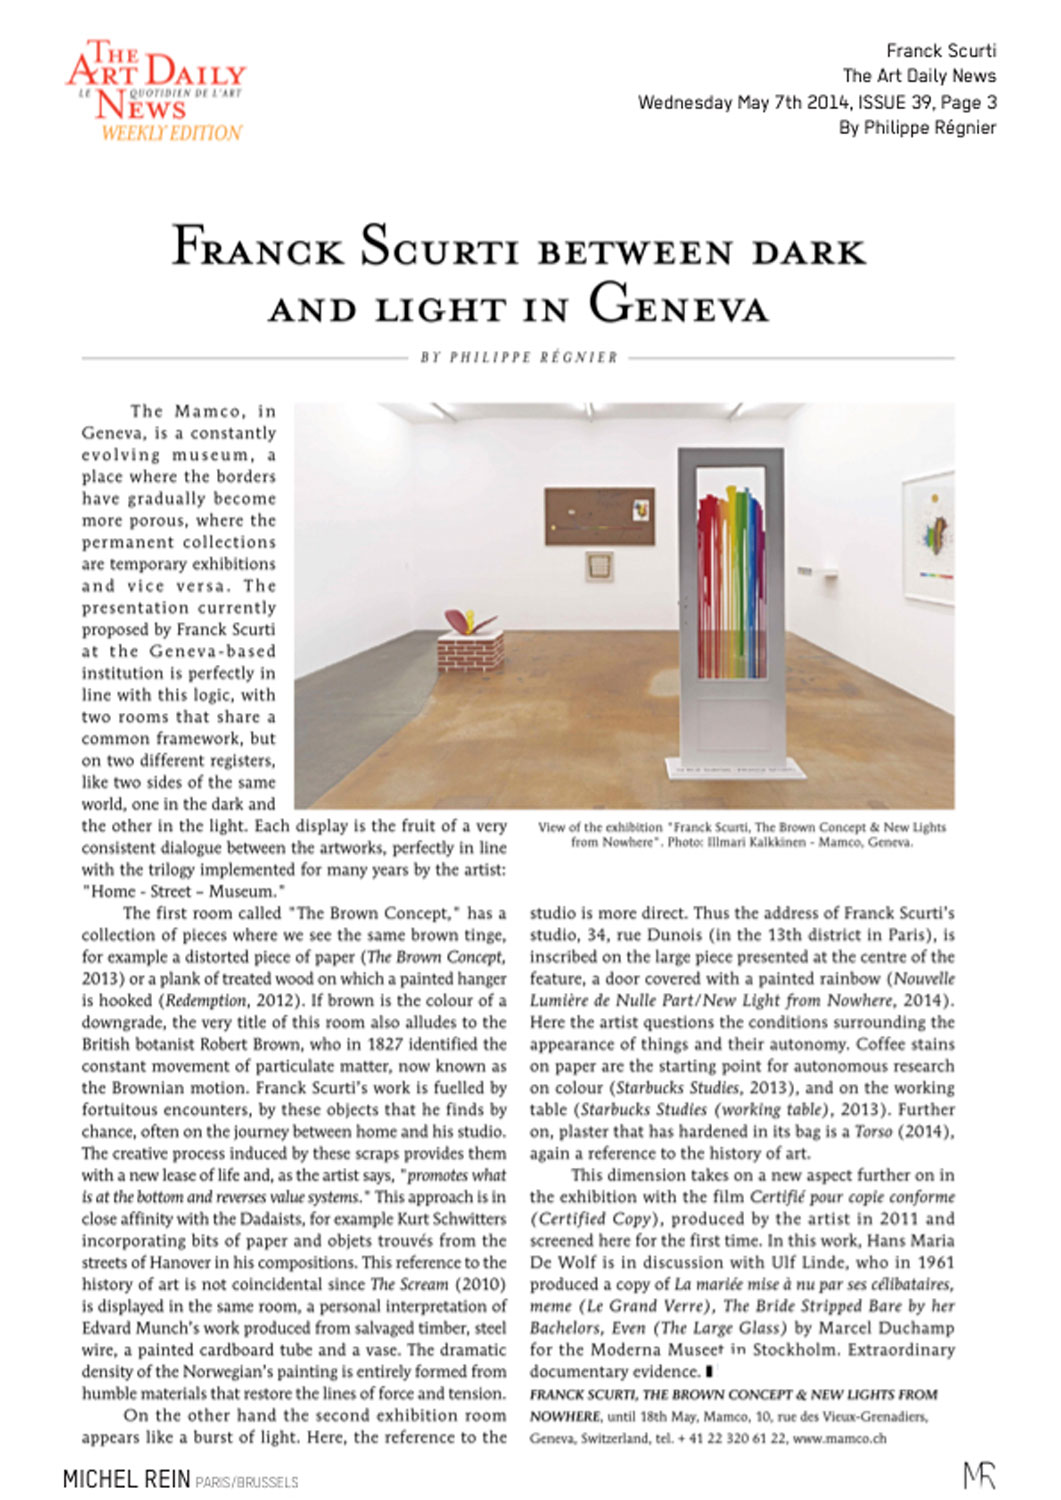 Franck Scurti between dark and light in Geneva - Daily Art News